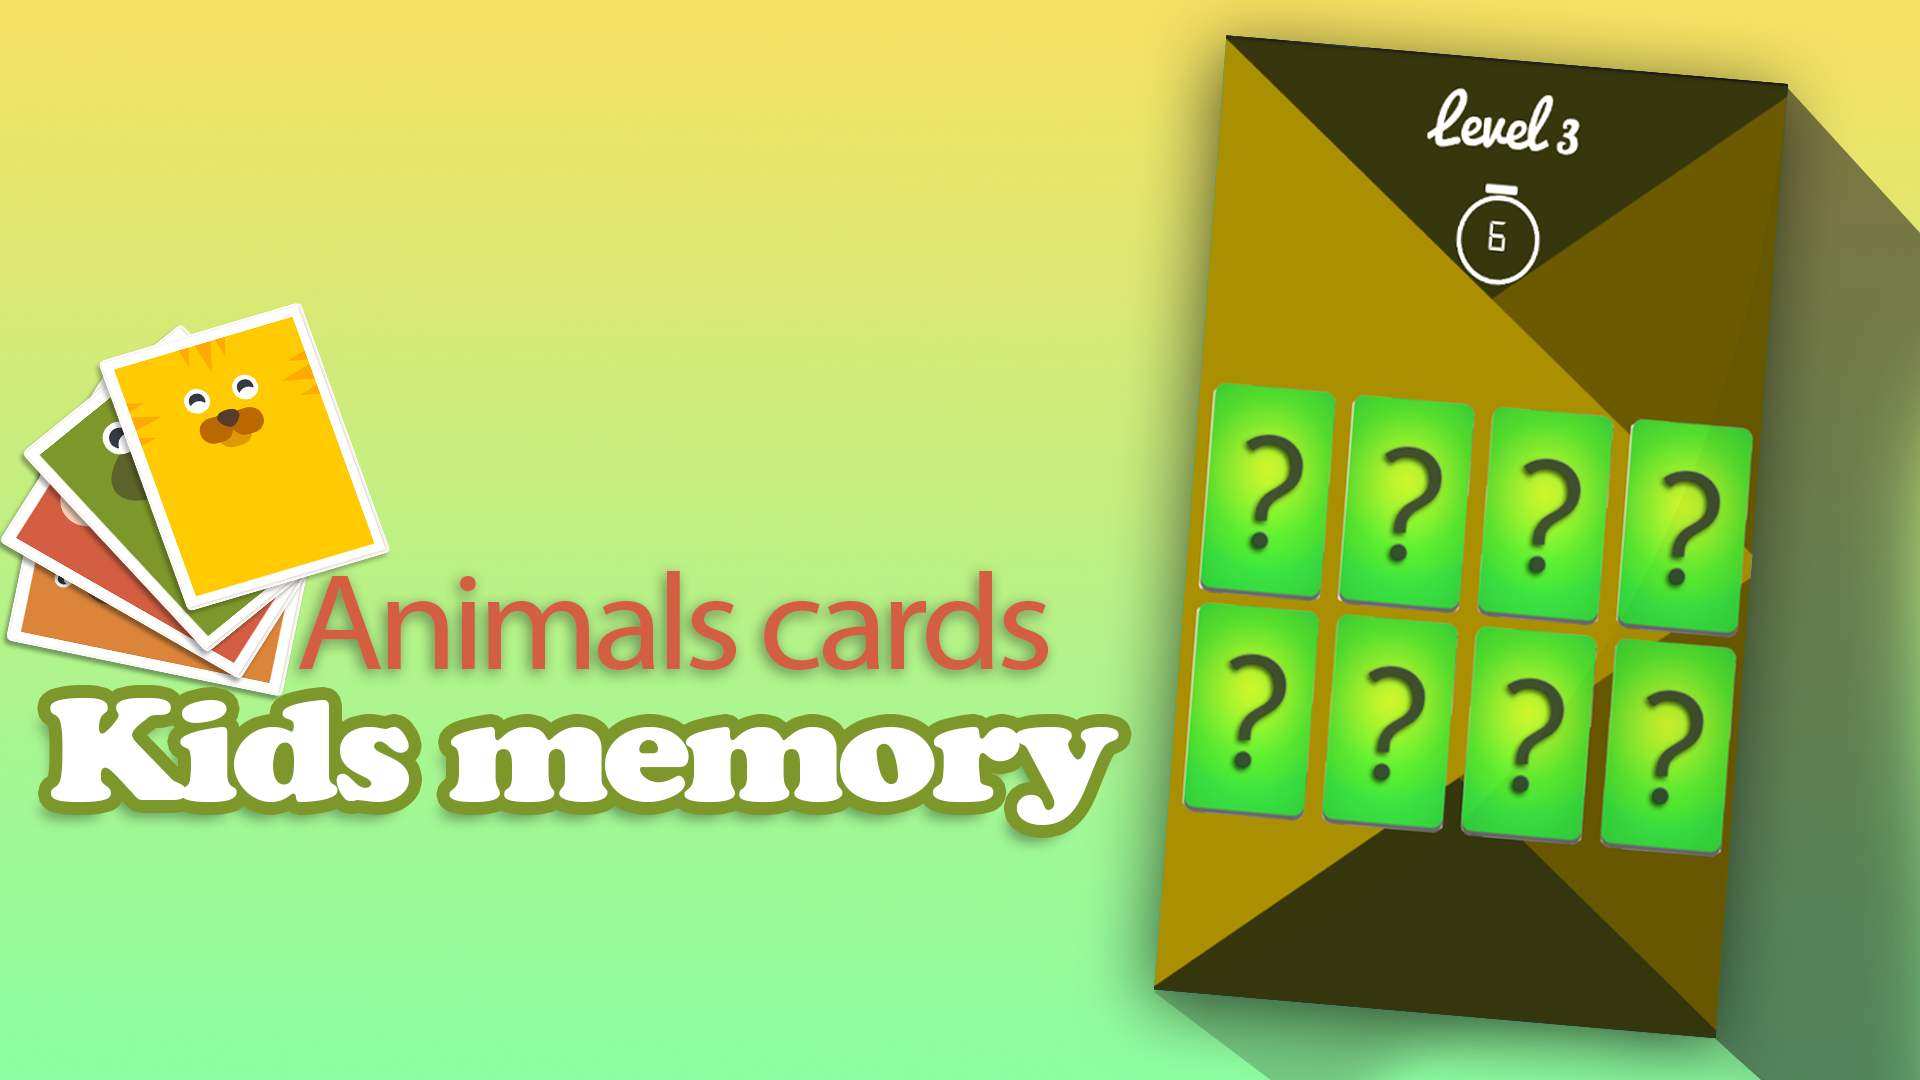 Kids memory: Animals cards